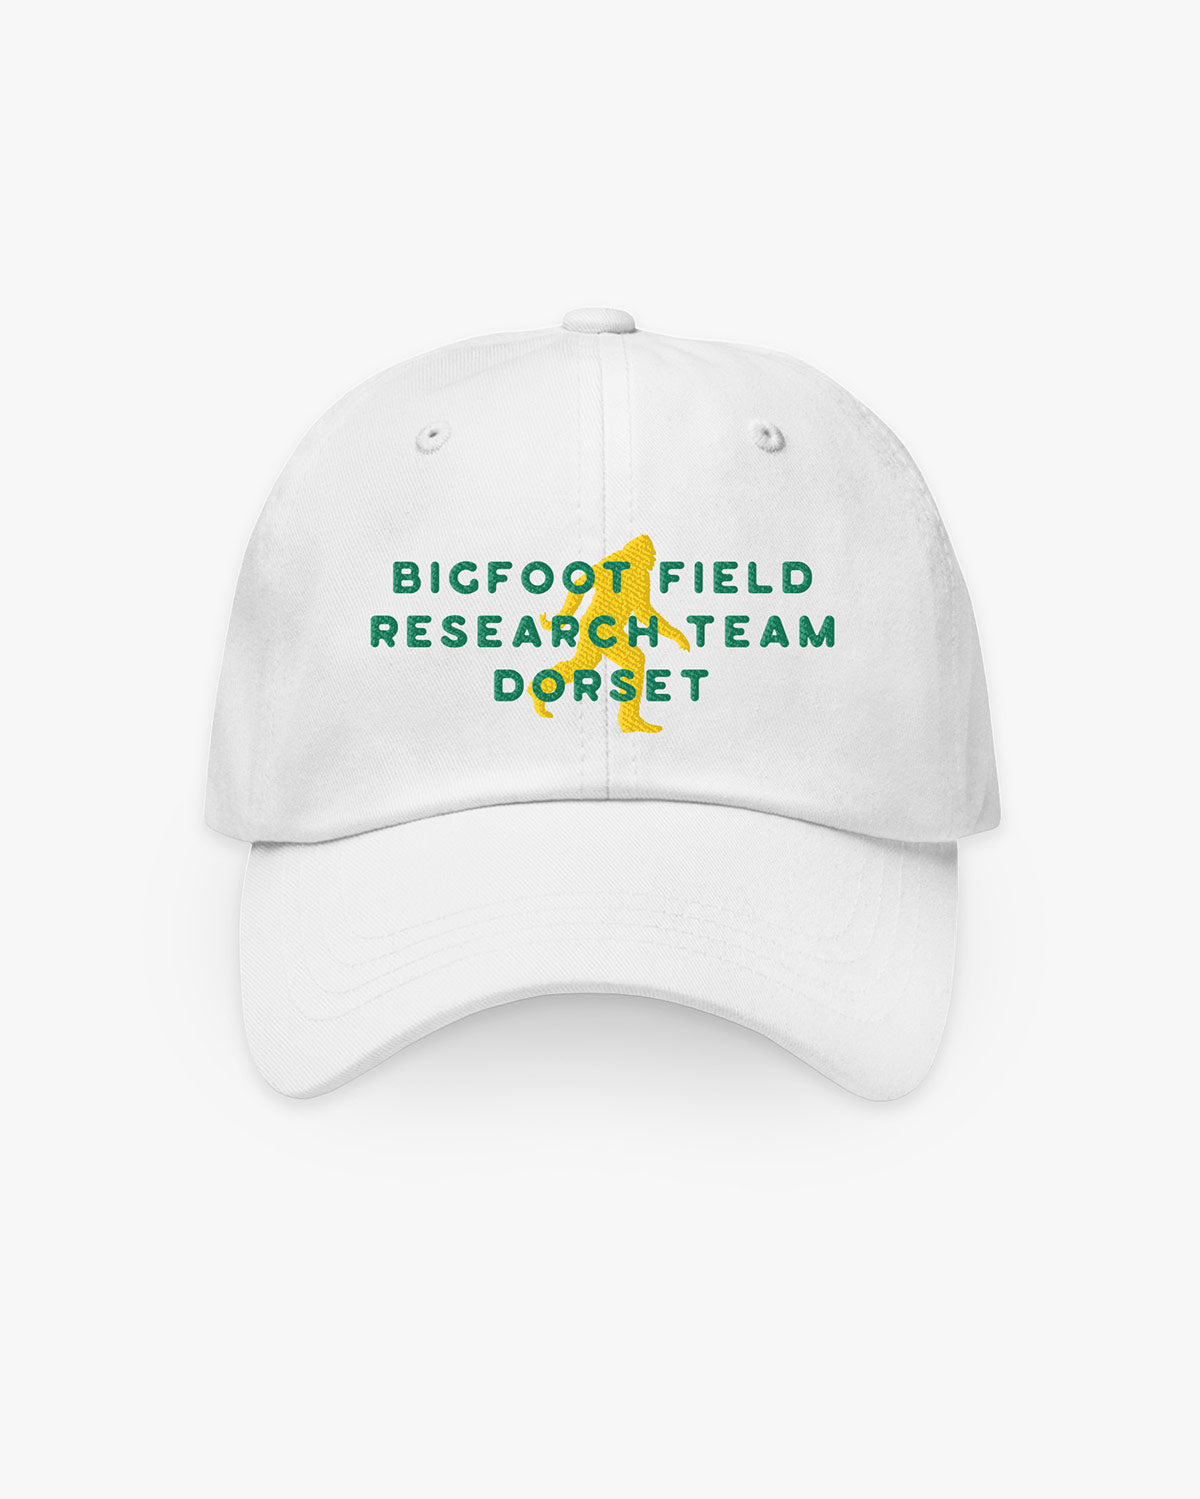 Bigfoot Research Team - Dorset - Hat